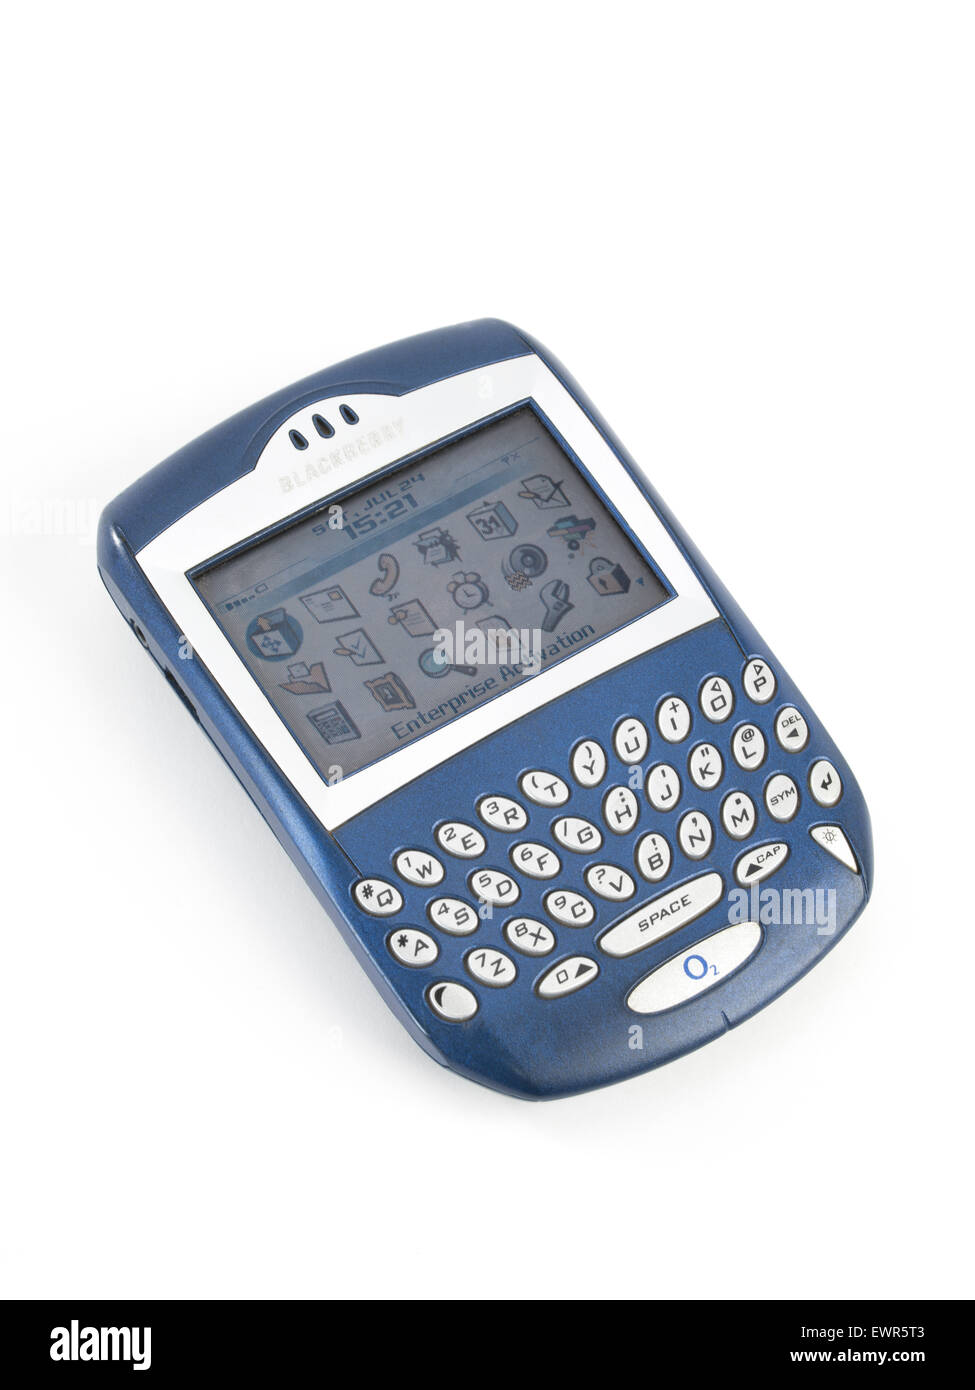 Blackberry 7230 Mobile Phone Released 2003 Stock Photo